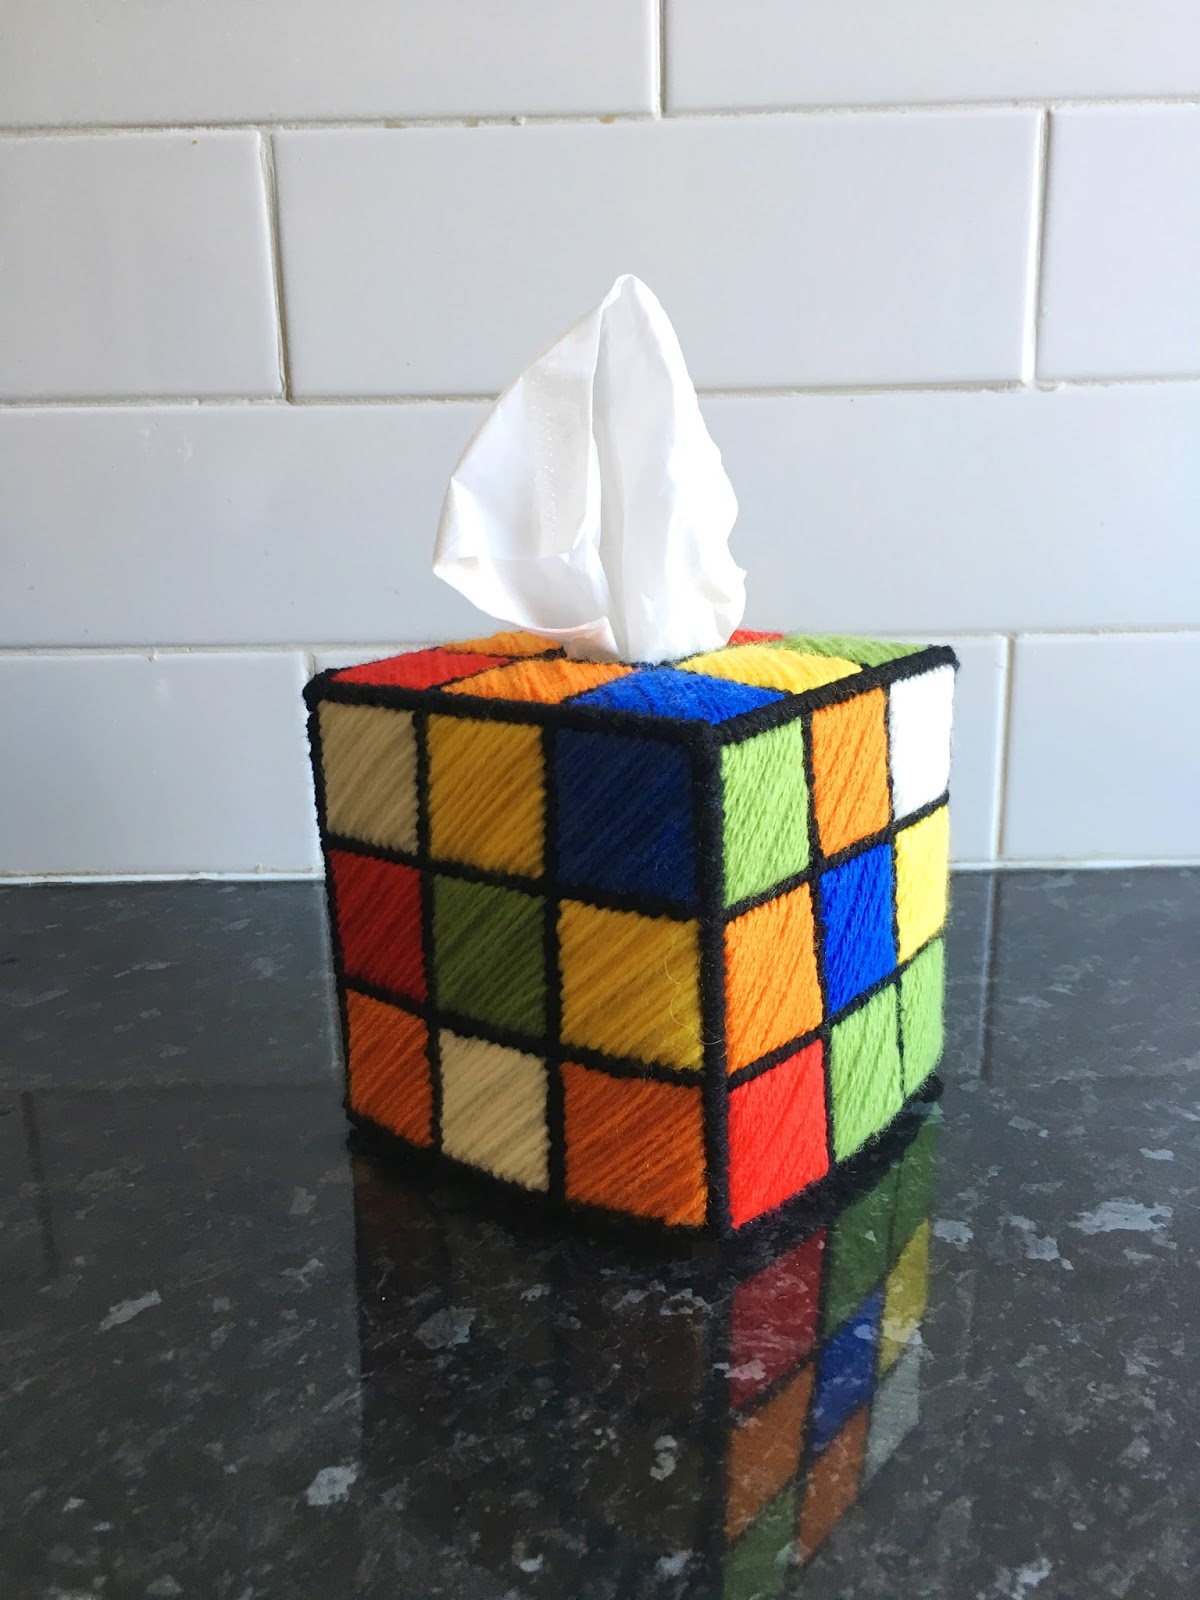 Tissue box rubik's cube V2